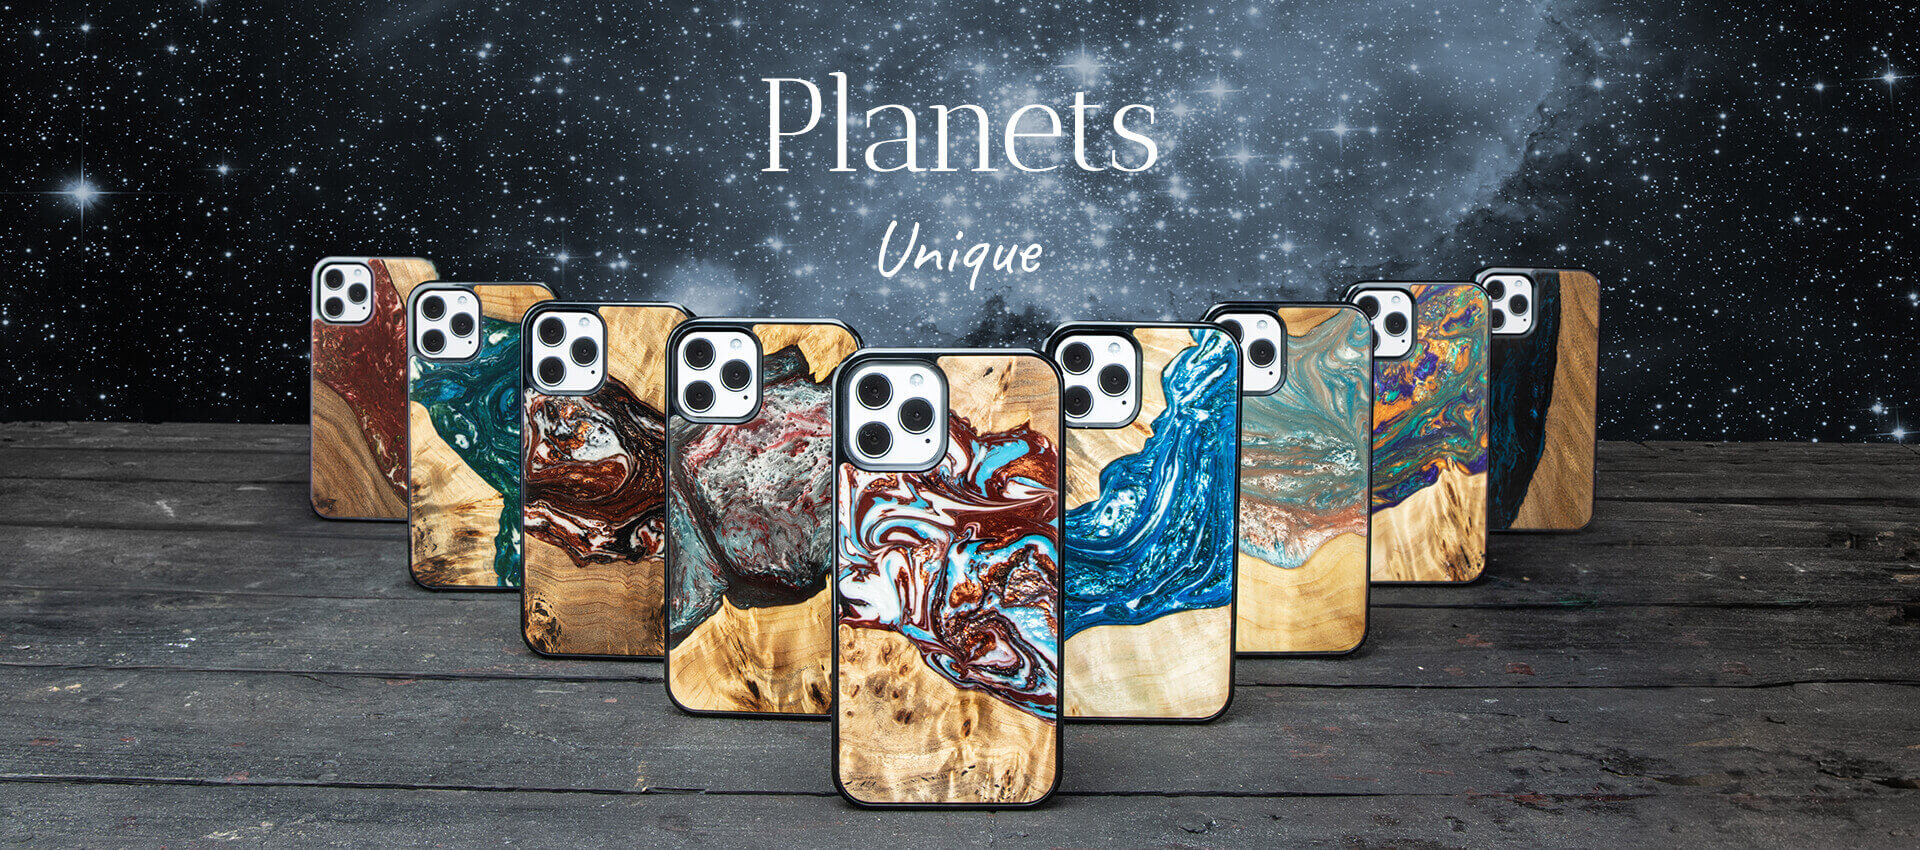 cover_planets_deskopt